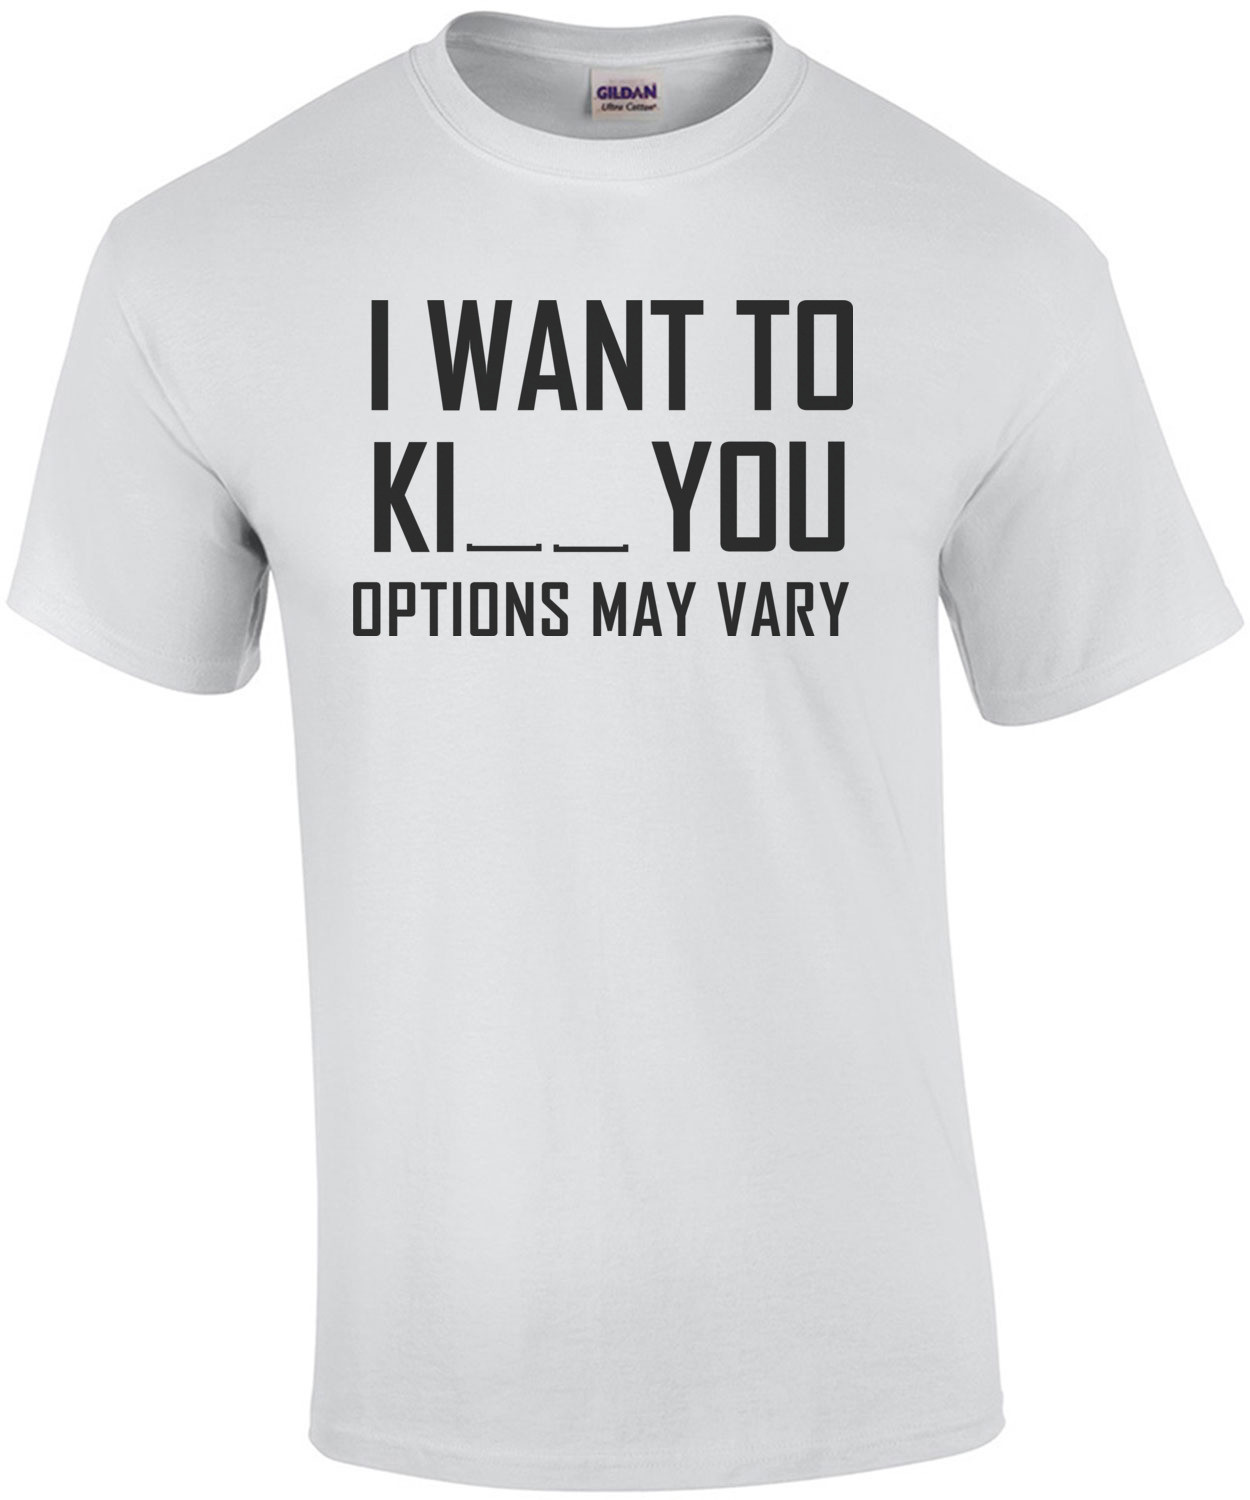 I want to ki__ you options may vary t-shirt